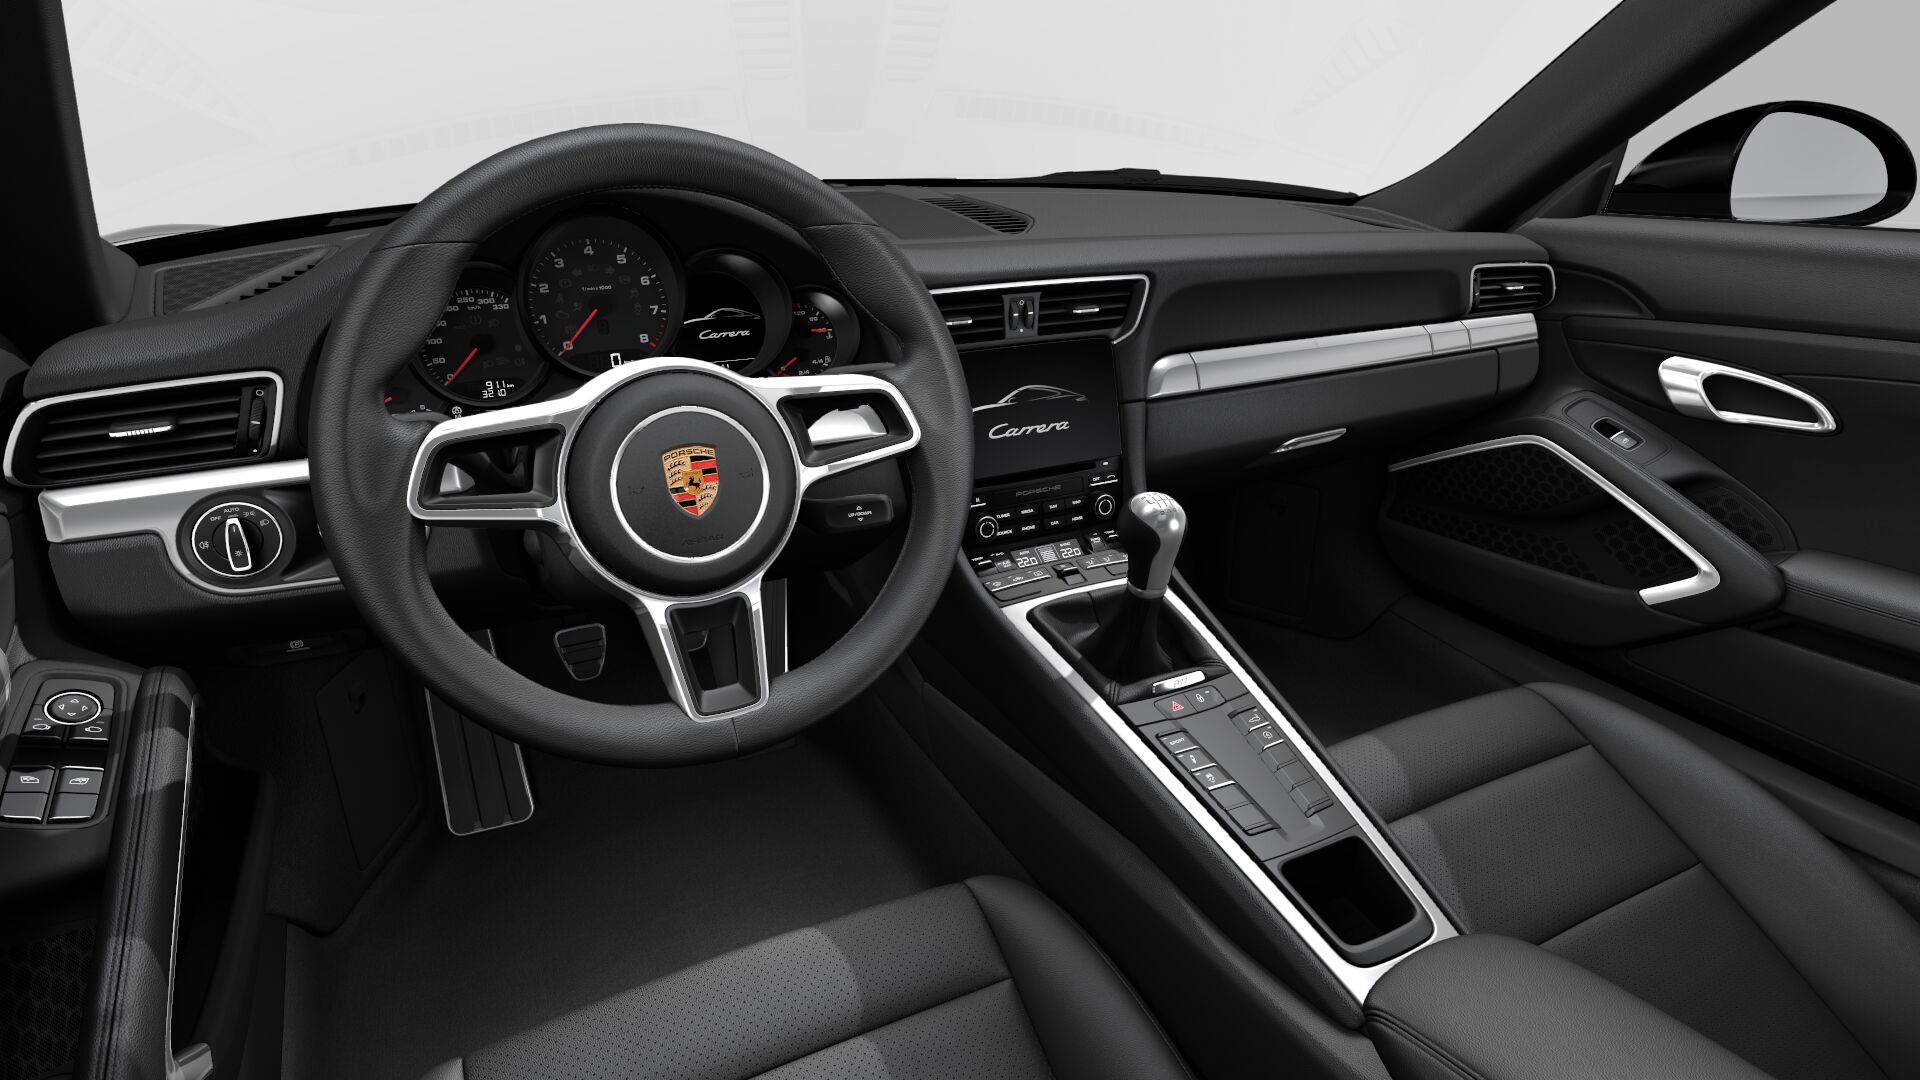 Porsche 911 Carrera 4S Cabriolet interior view